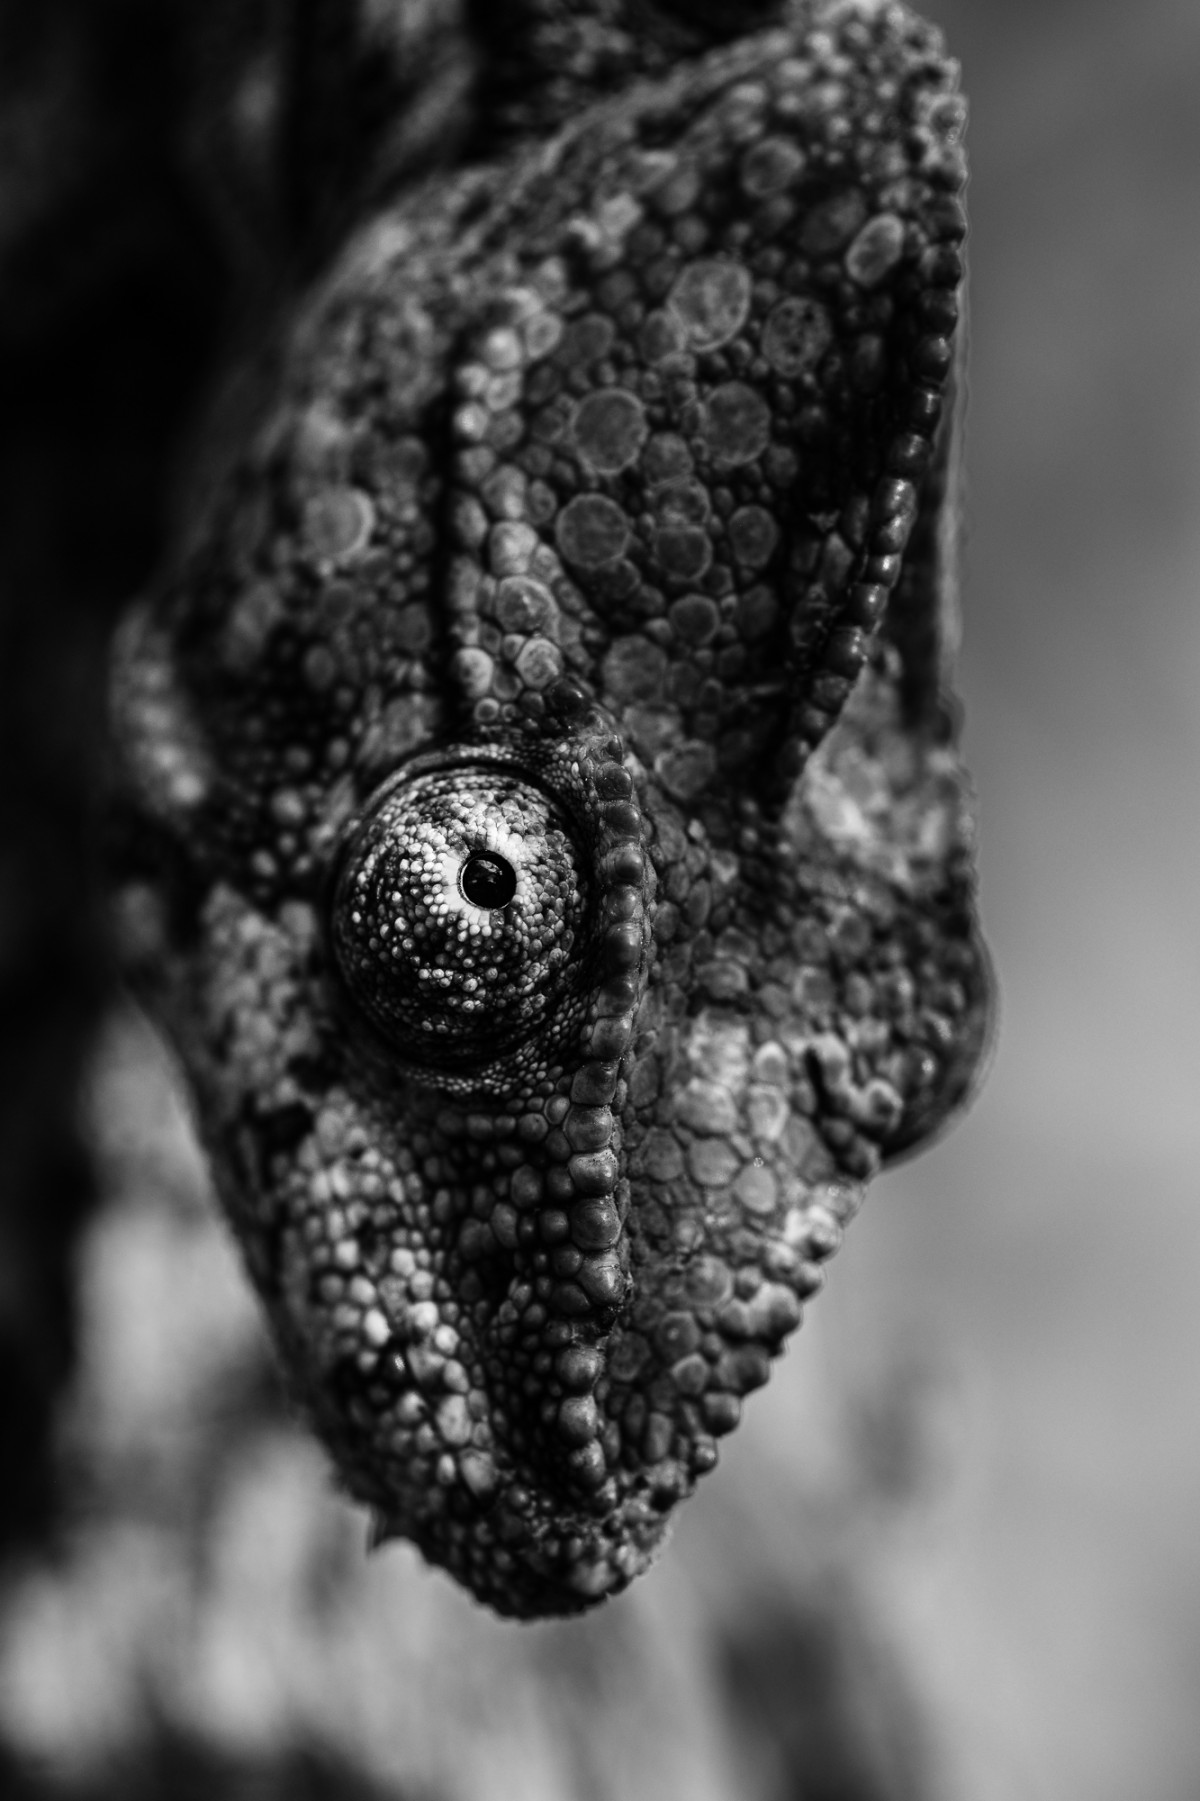 Black and white portrait of a chameleon head - Ambalavao, Madagascar